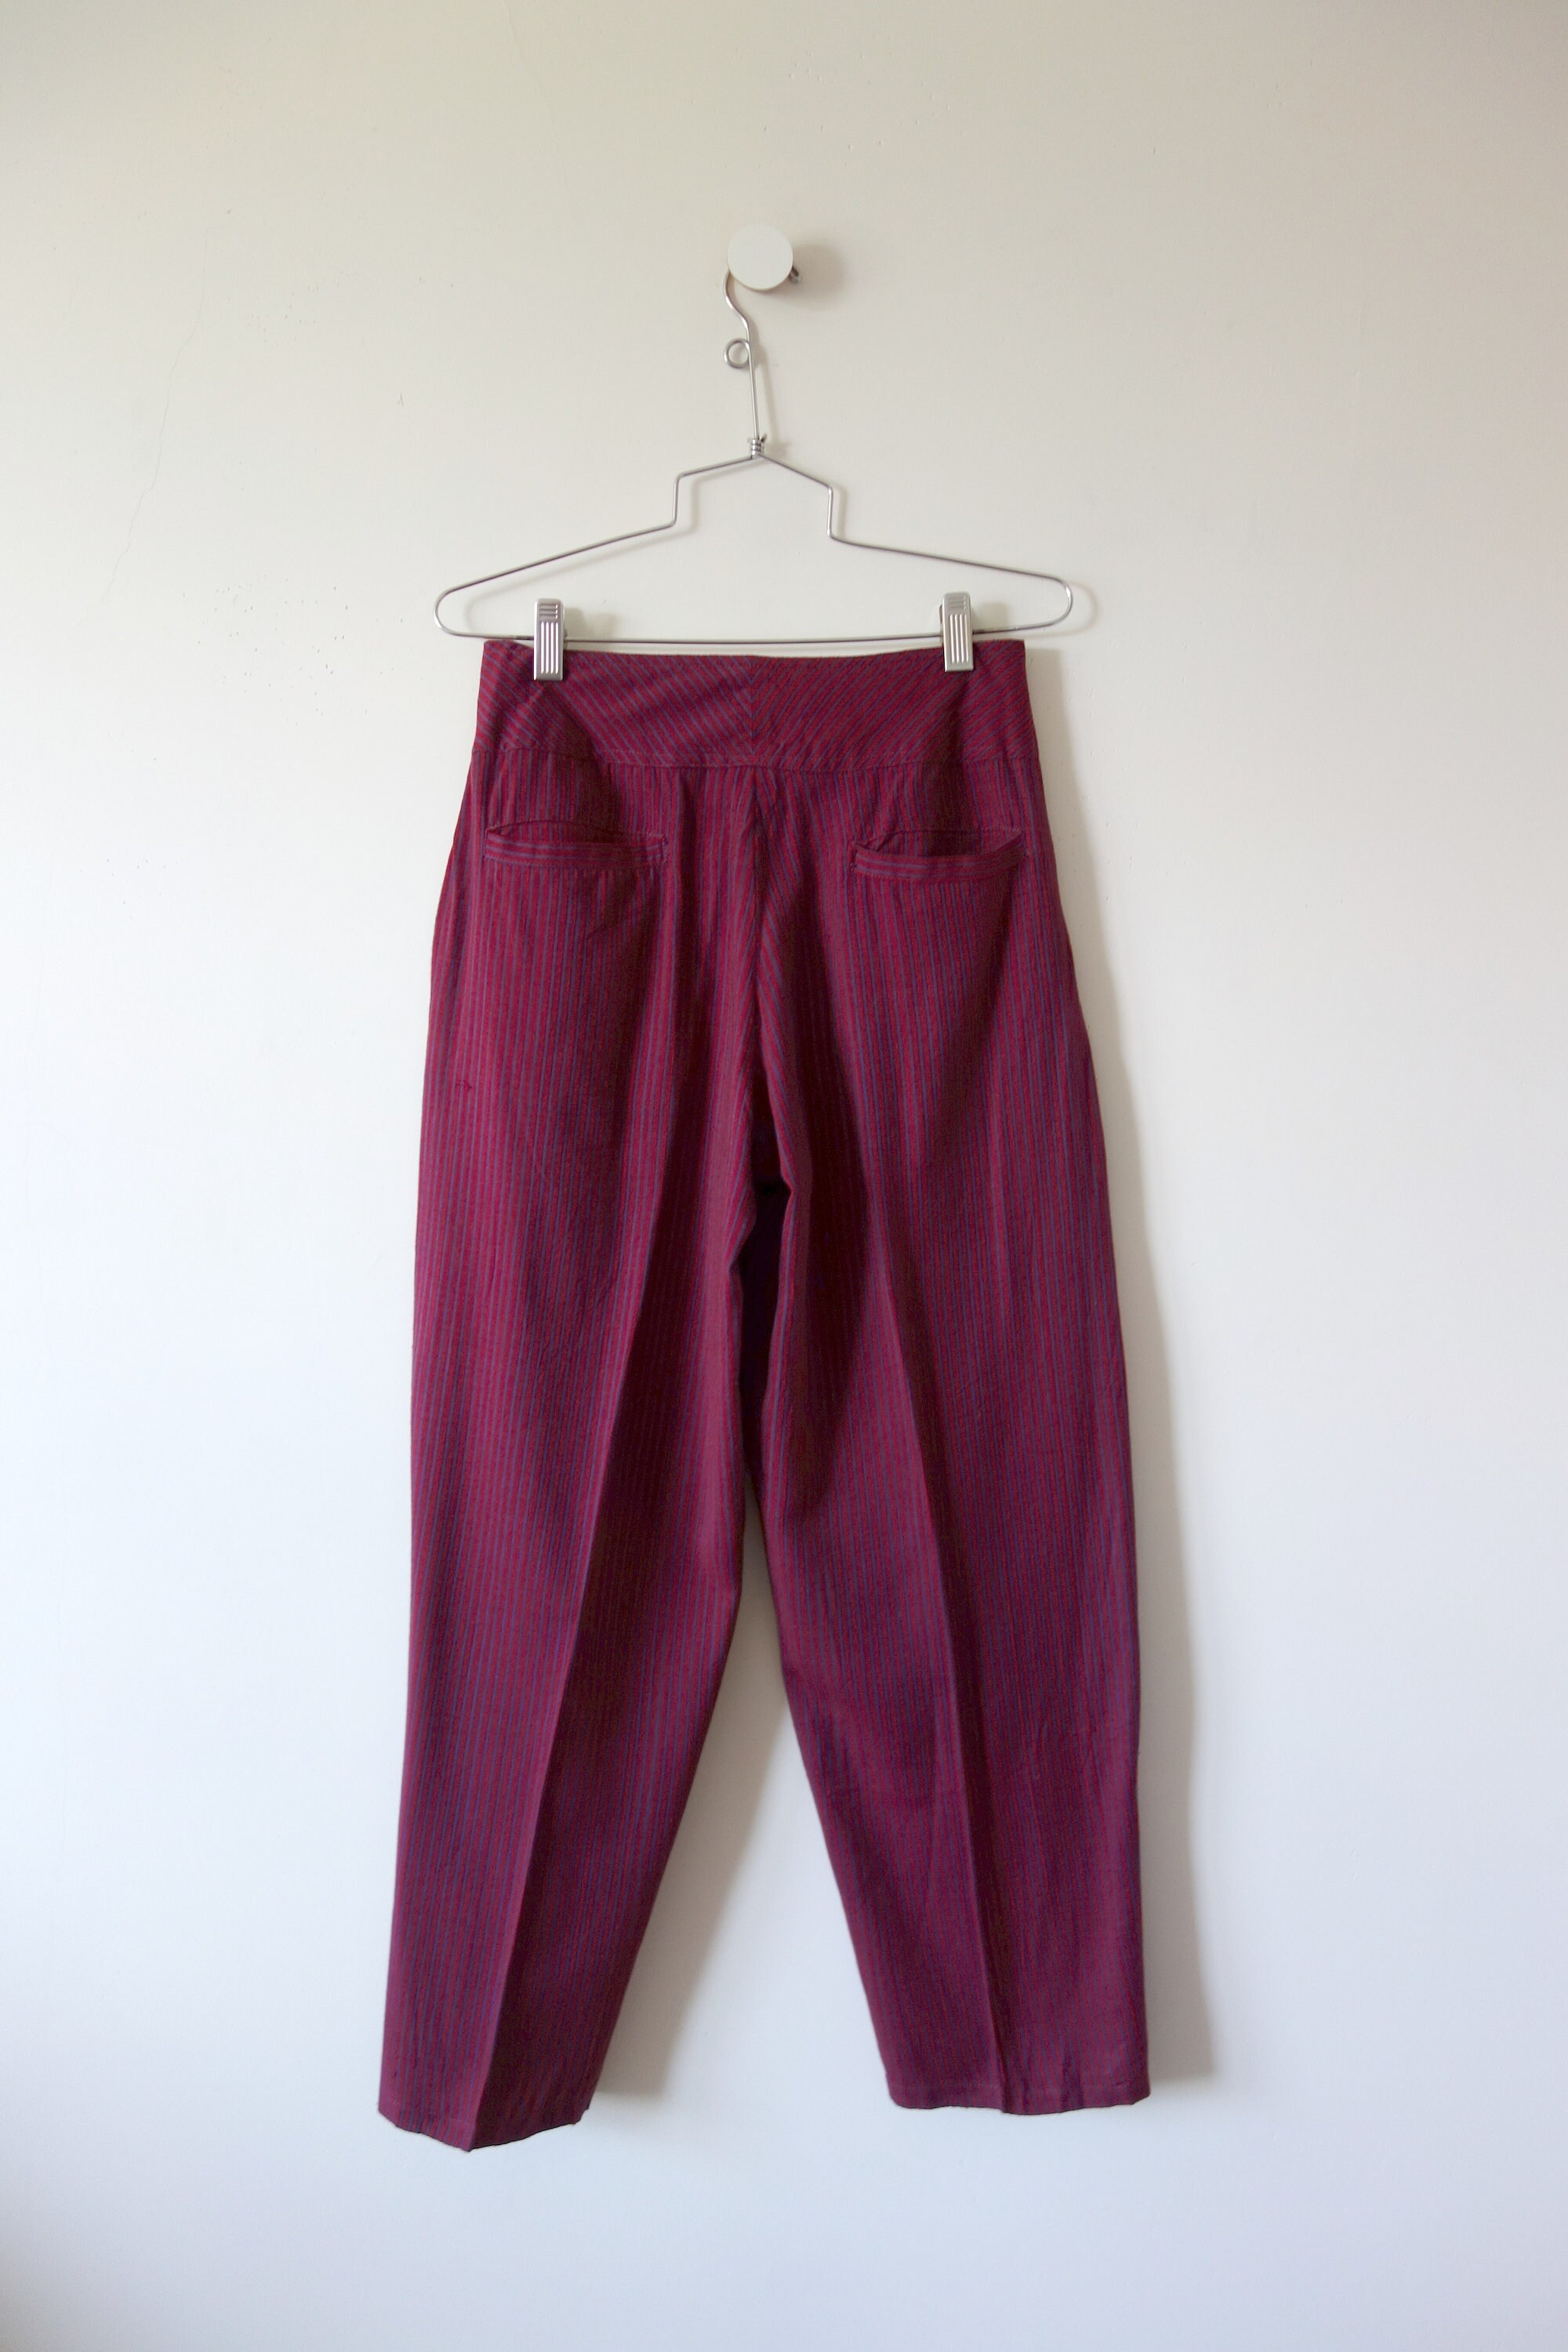 1980s Harem Pants Vintage Striped Cotton Blend High Waist - Etsy